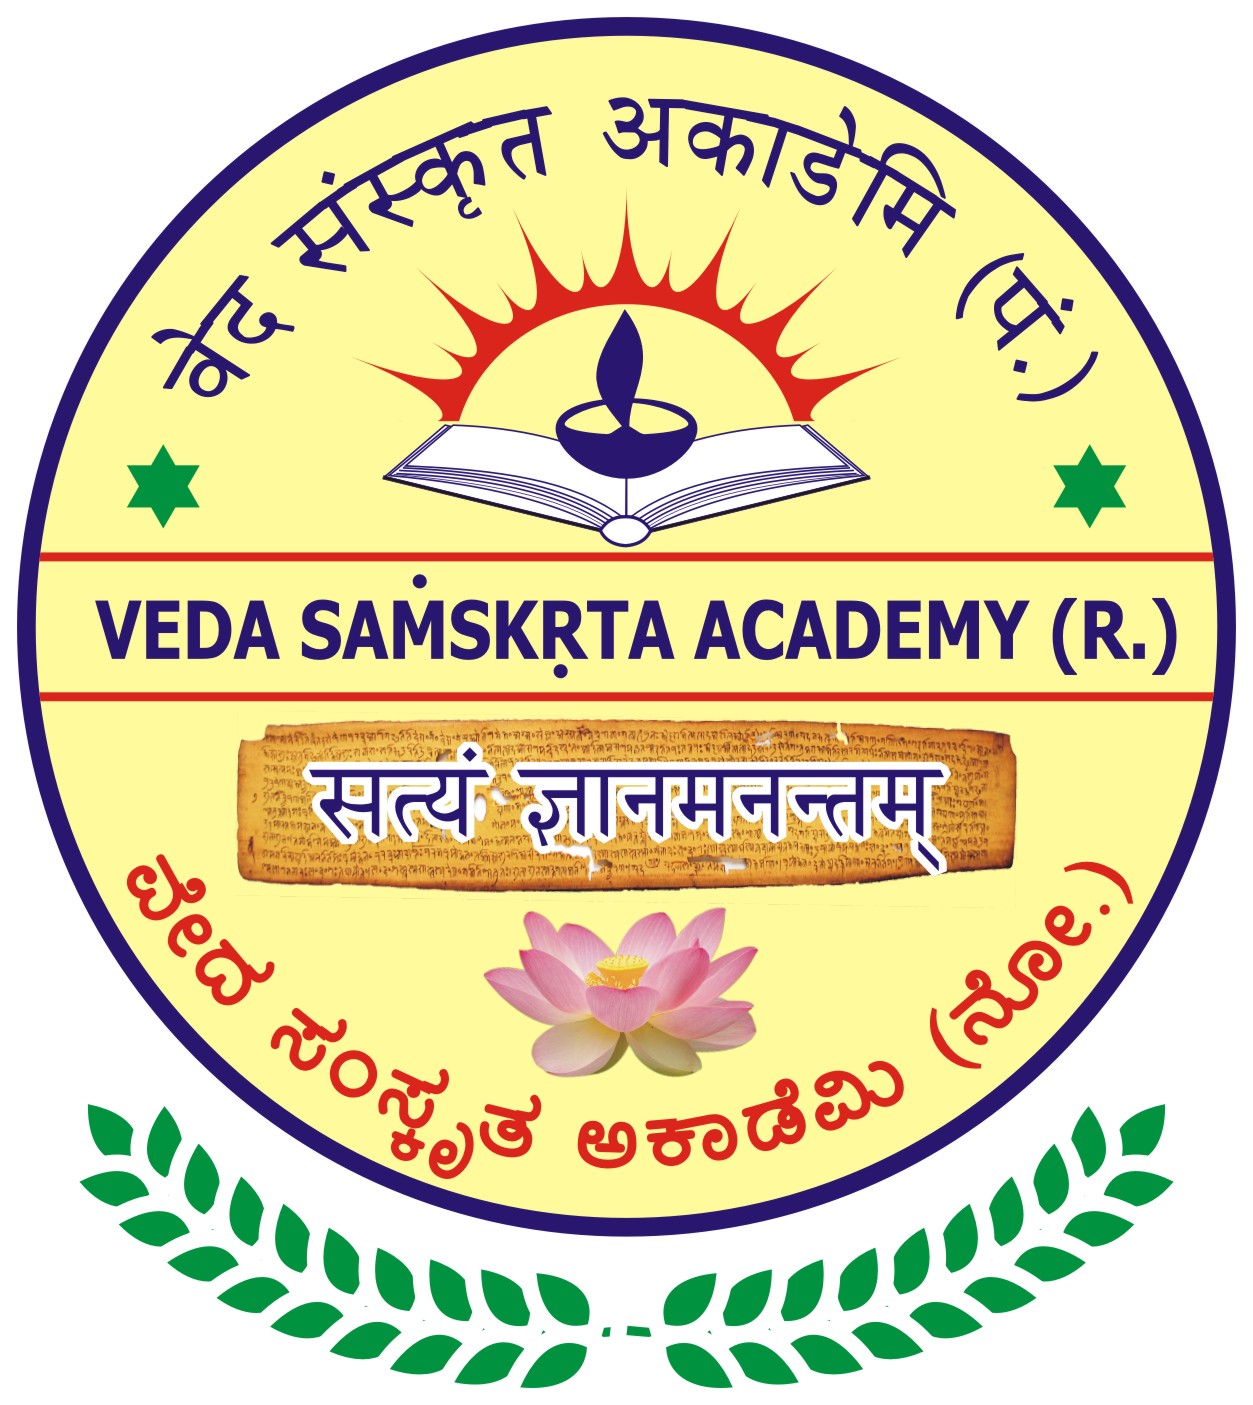 Veda Samskrita Academy(R)